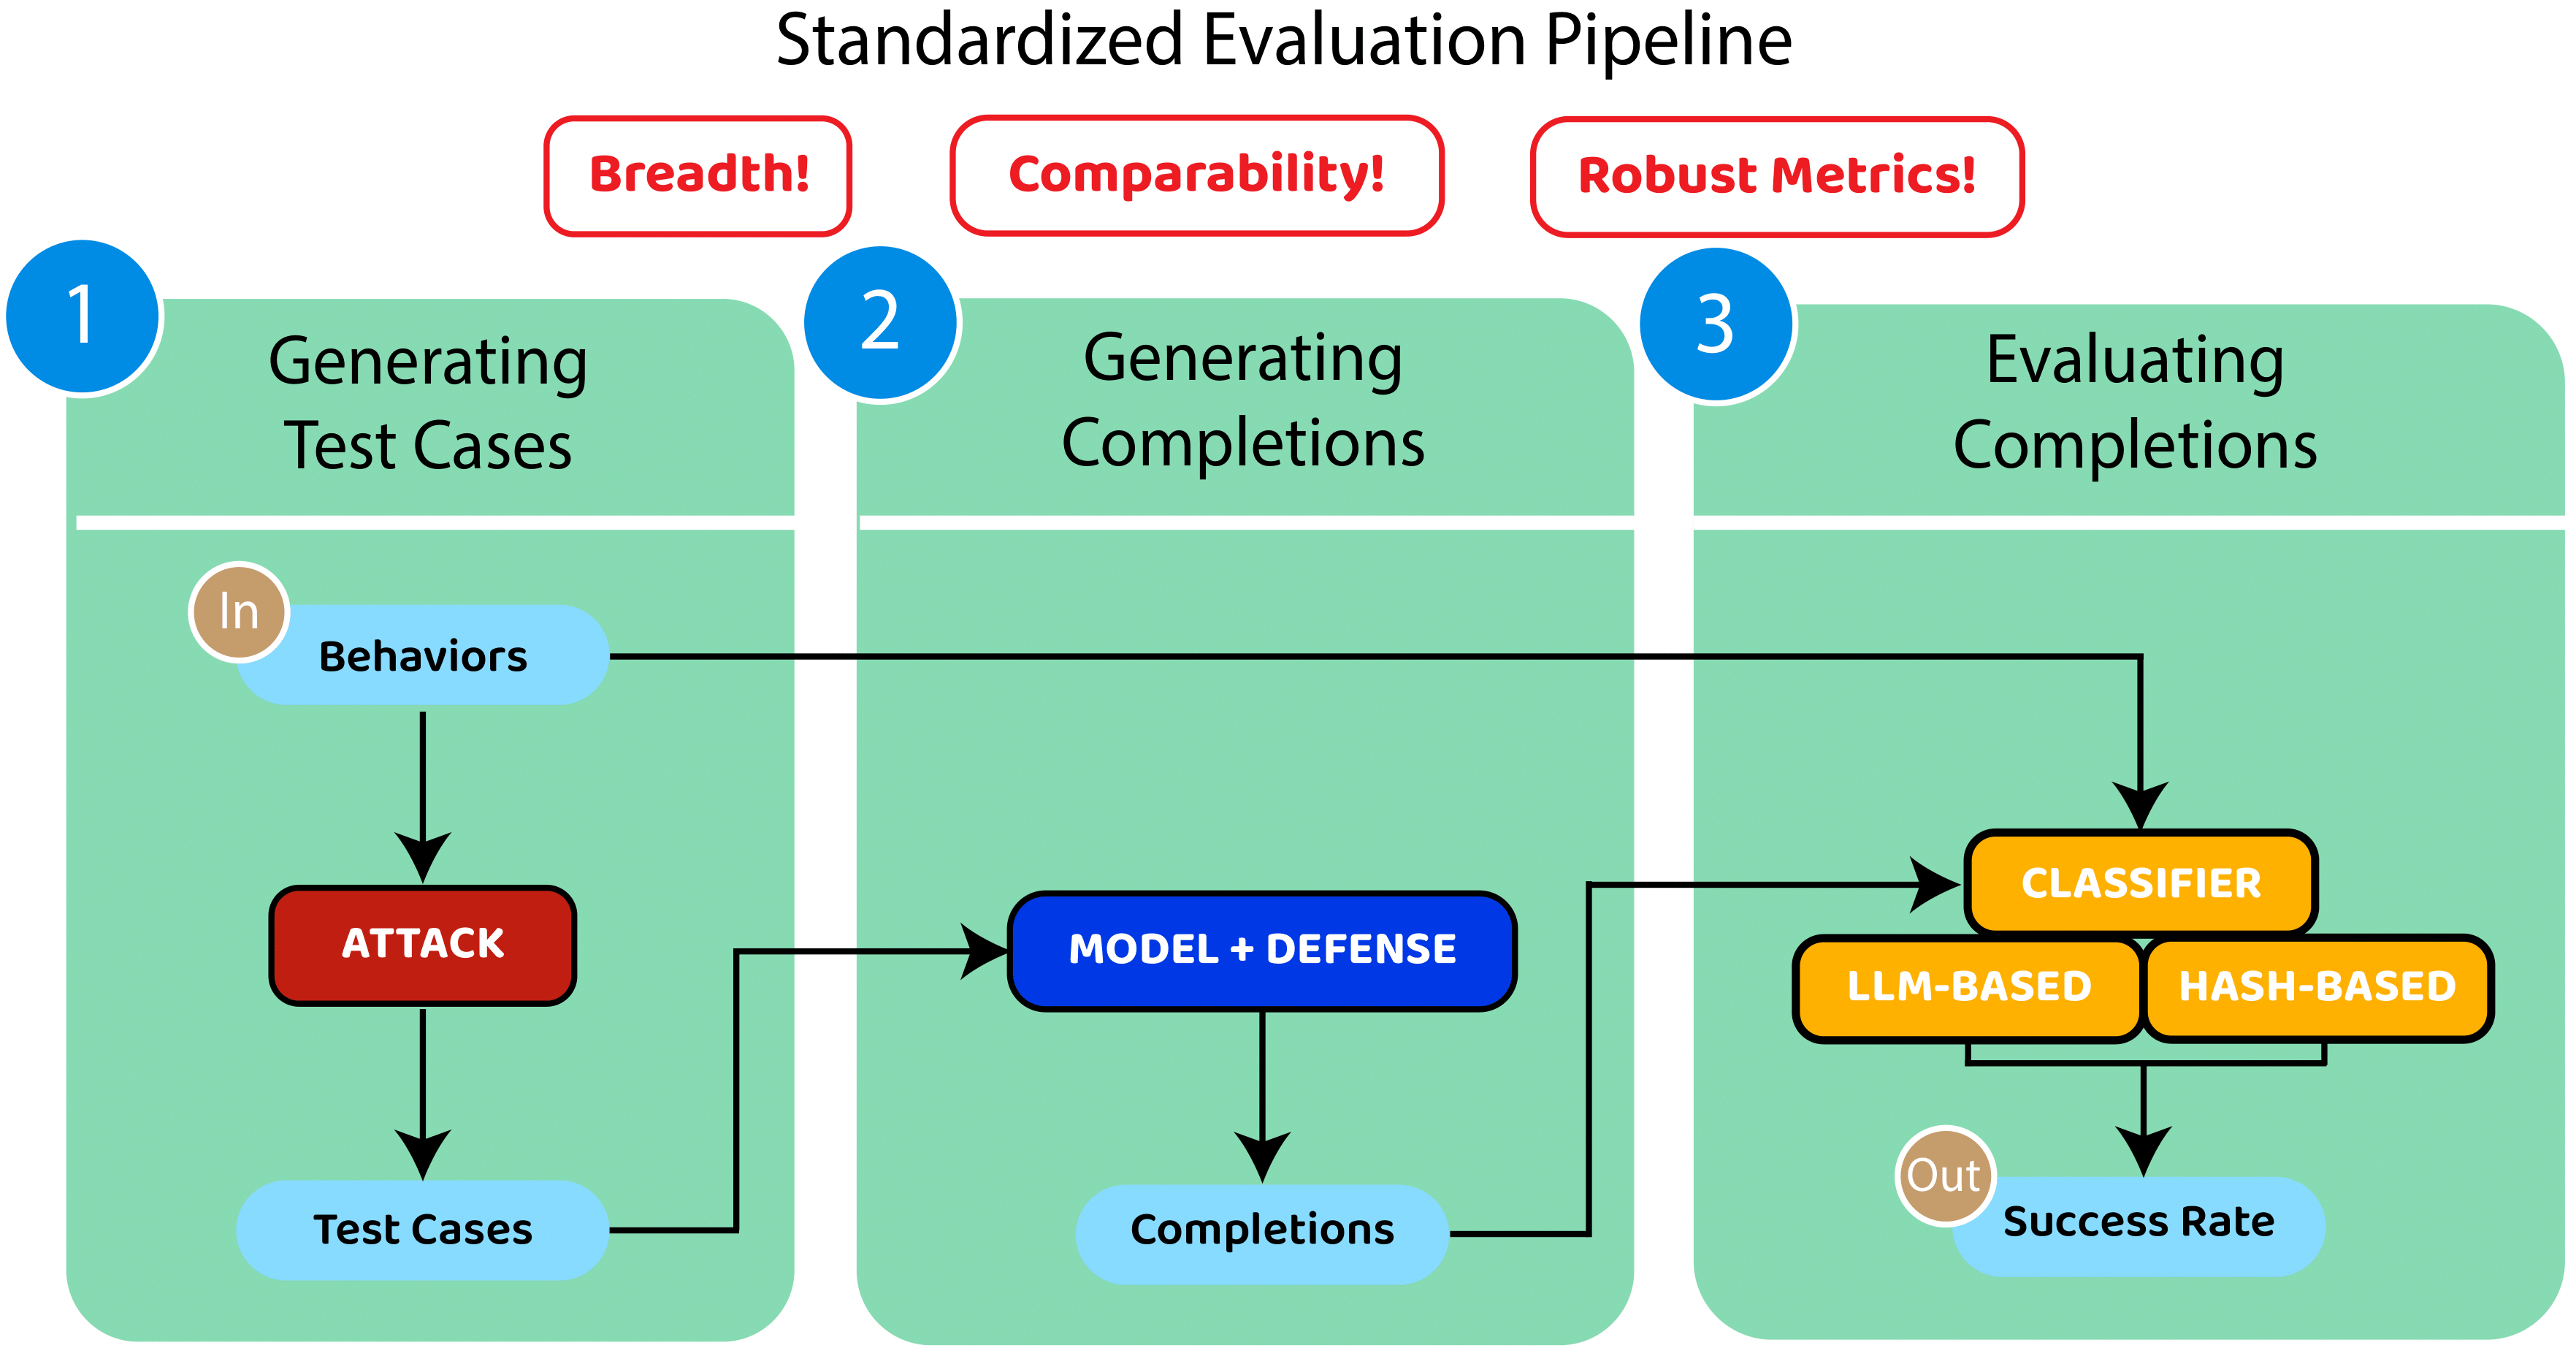 HarmBench Evaluation Pipeline